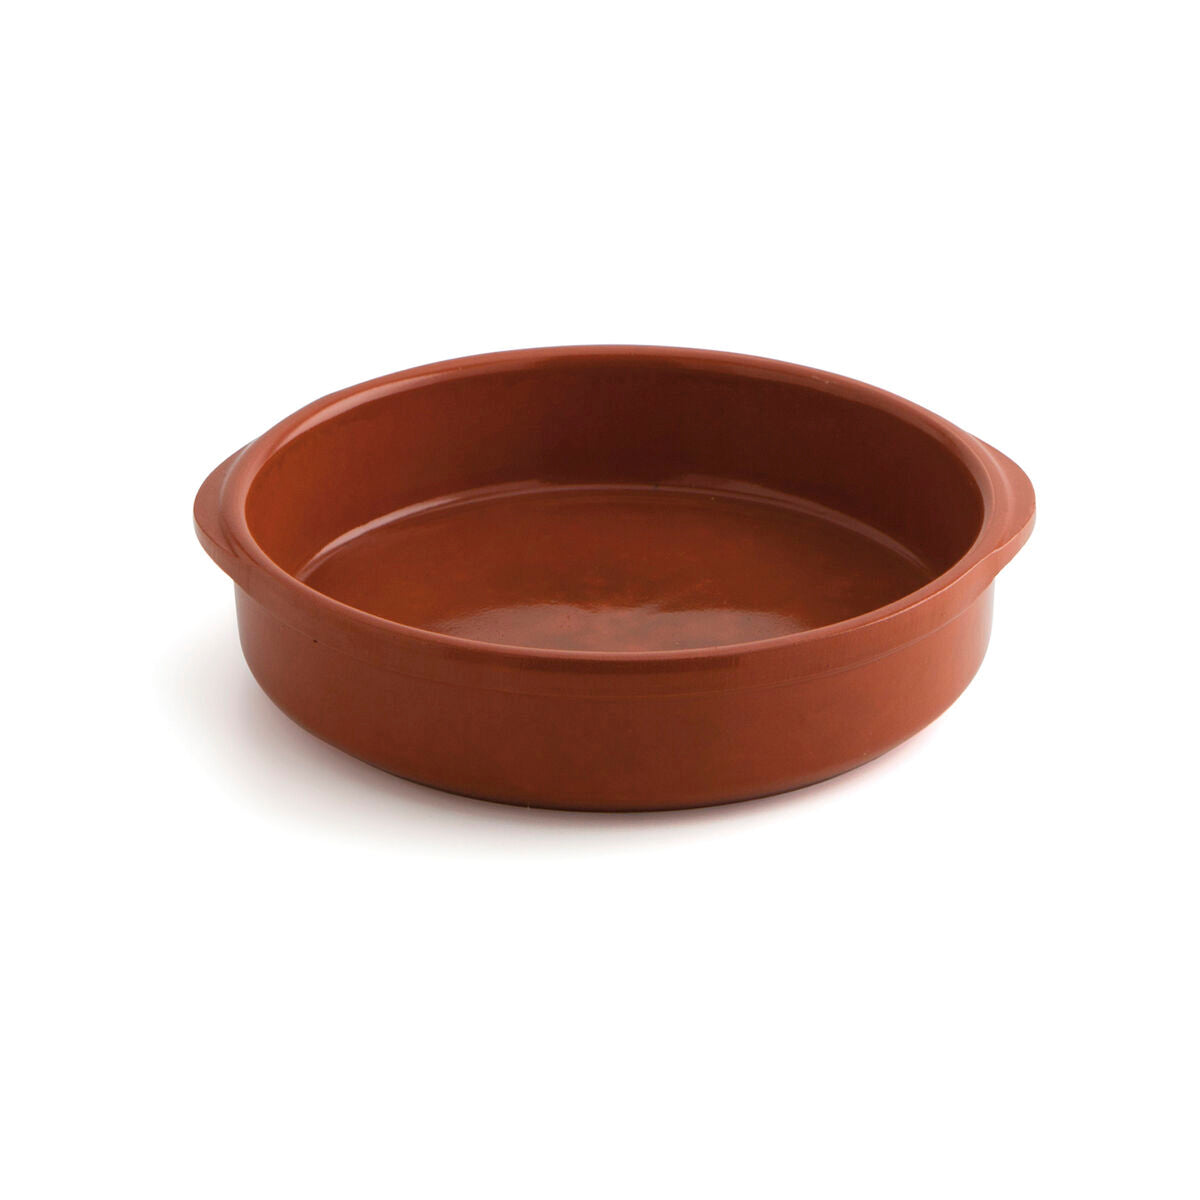 Casseruola raimundo barro ceramica professionale marrone Ø 26 cm 6 pezzi